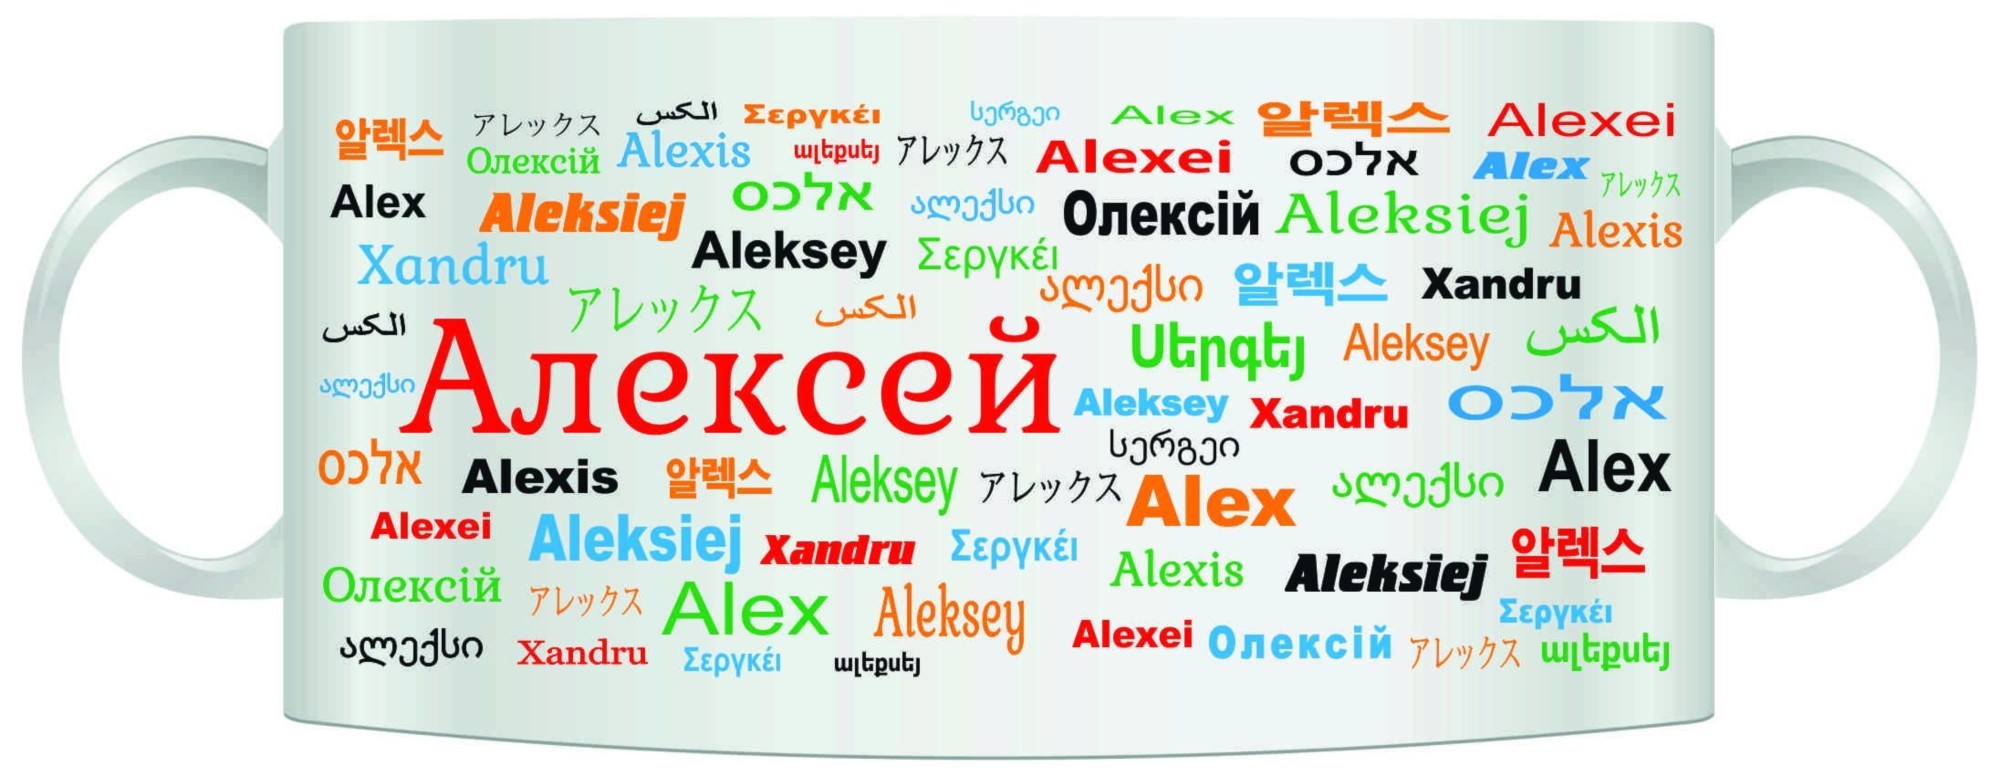 Алексей на разных языках